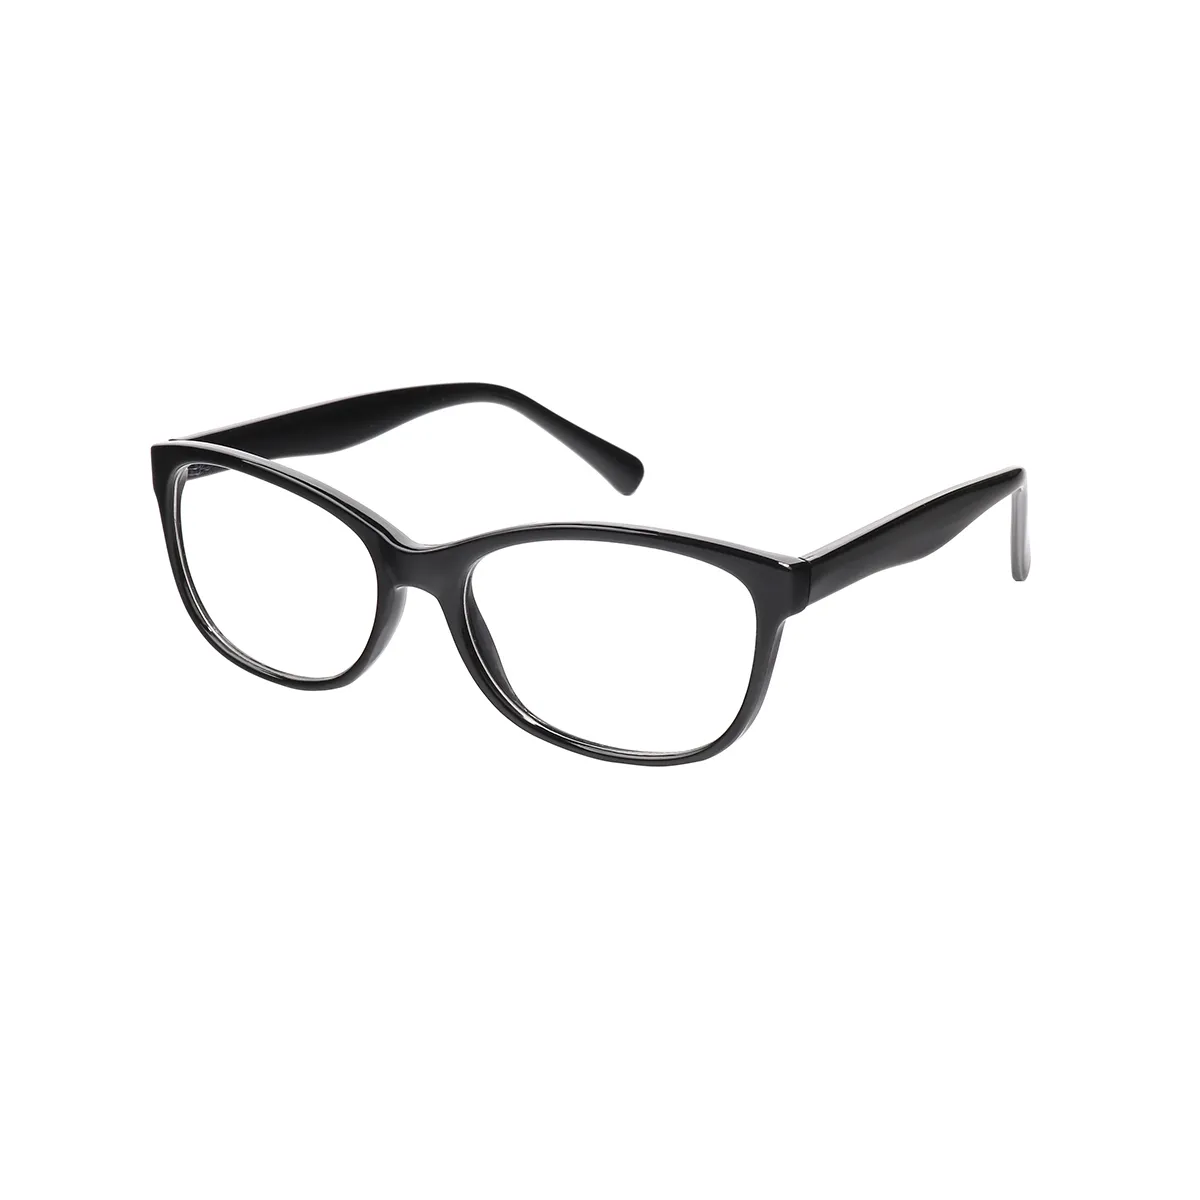 Claribel - Square Black Glasses for Women